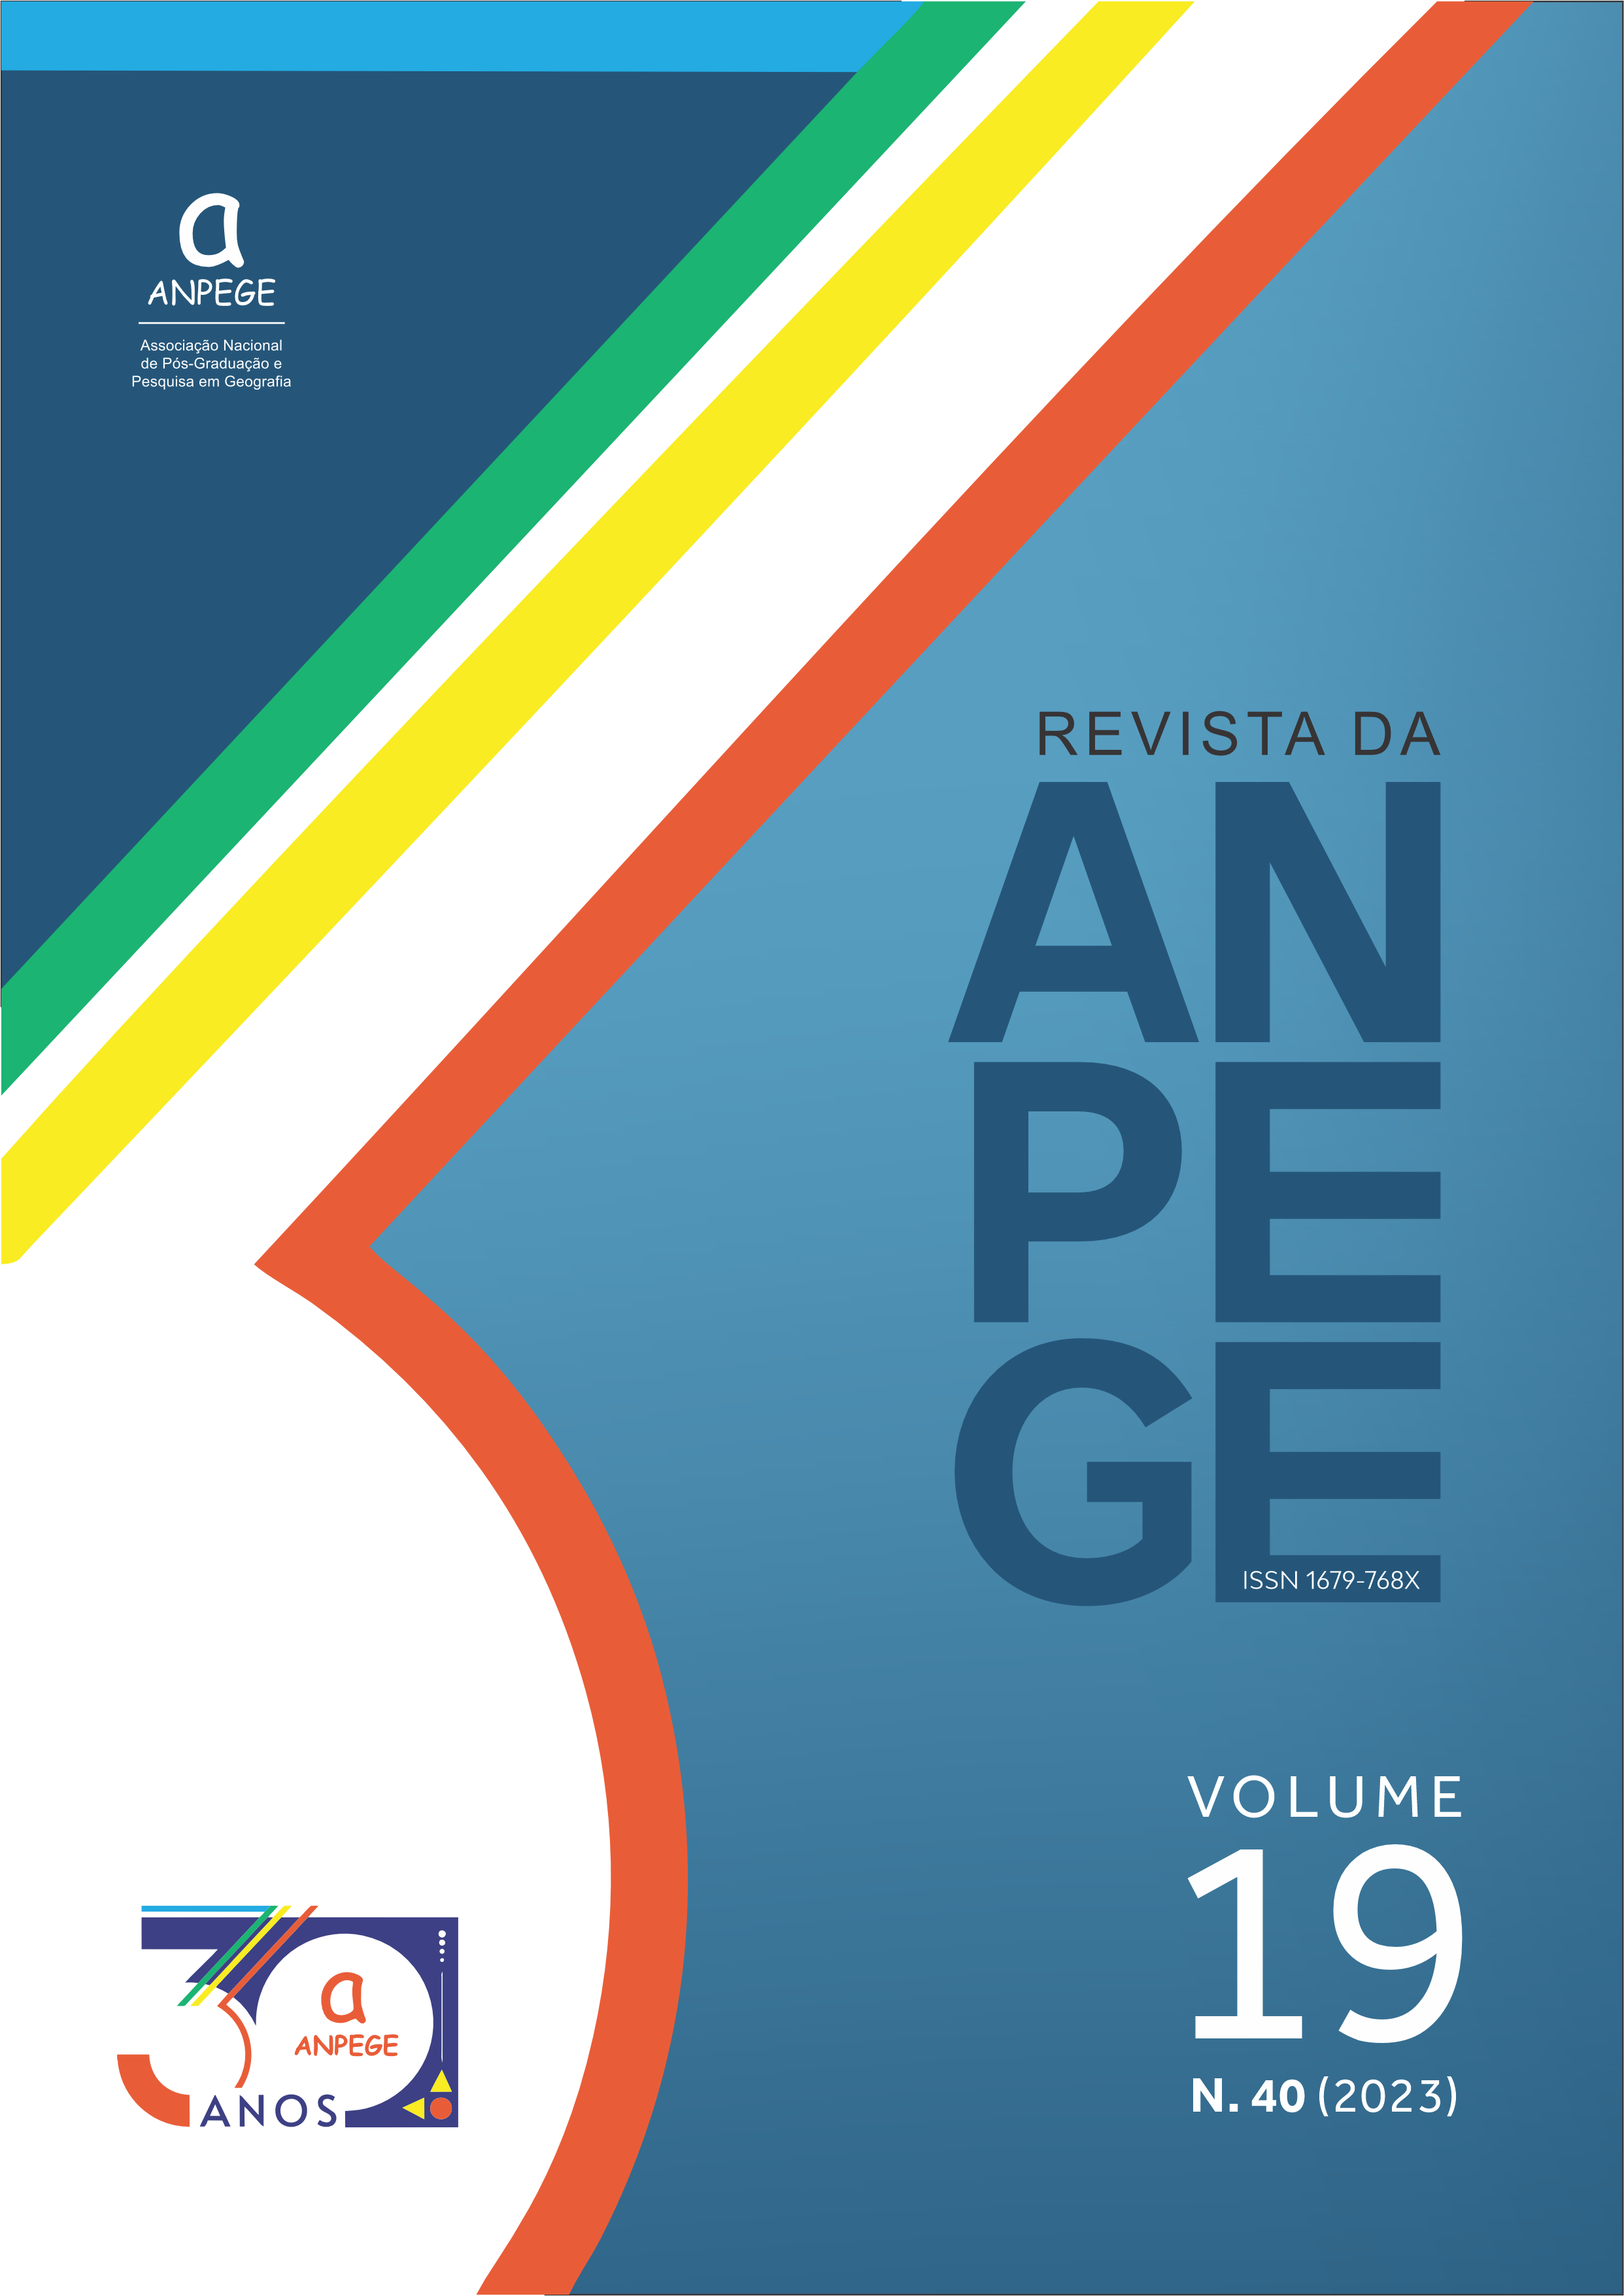 					View Vol. 19 No. 40 (2023): Revista da ANPEGE, Volume 19 Número 40
				